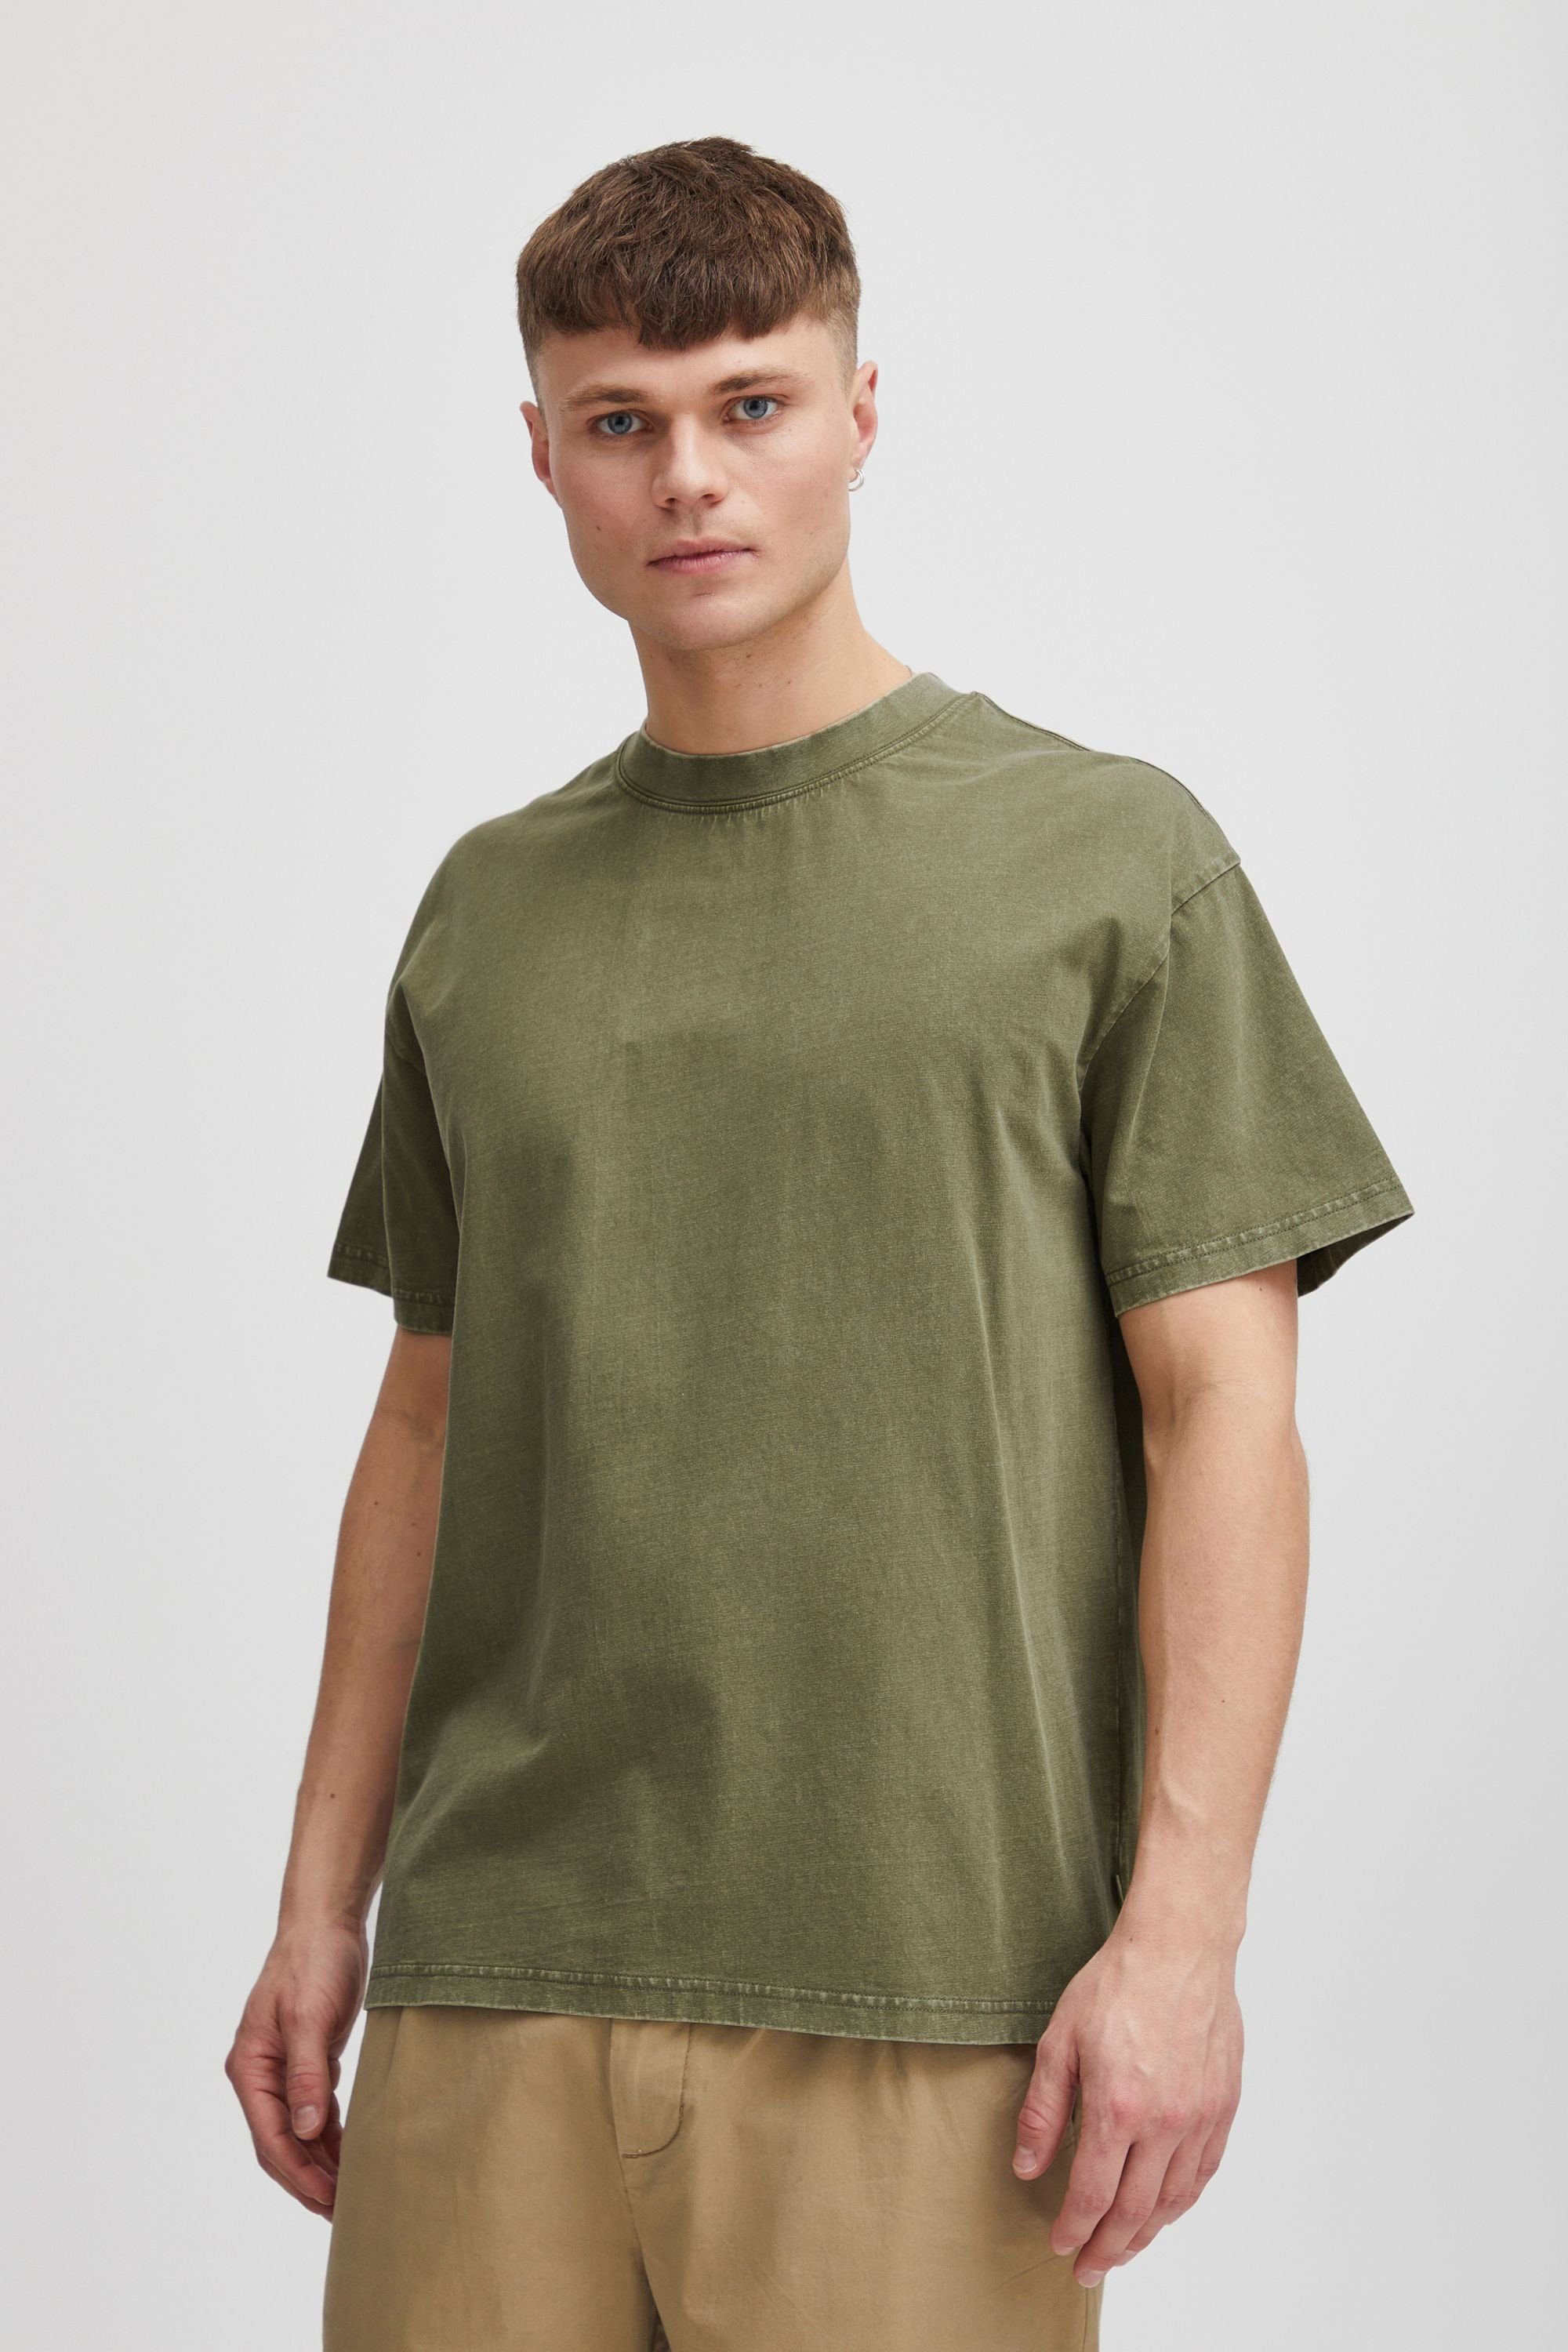 Solid T-Shirt SDGerlak (180515) - Olive 21107878 Dusty